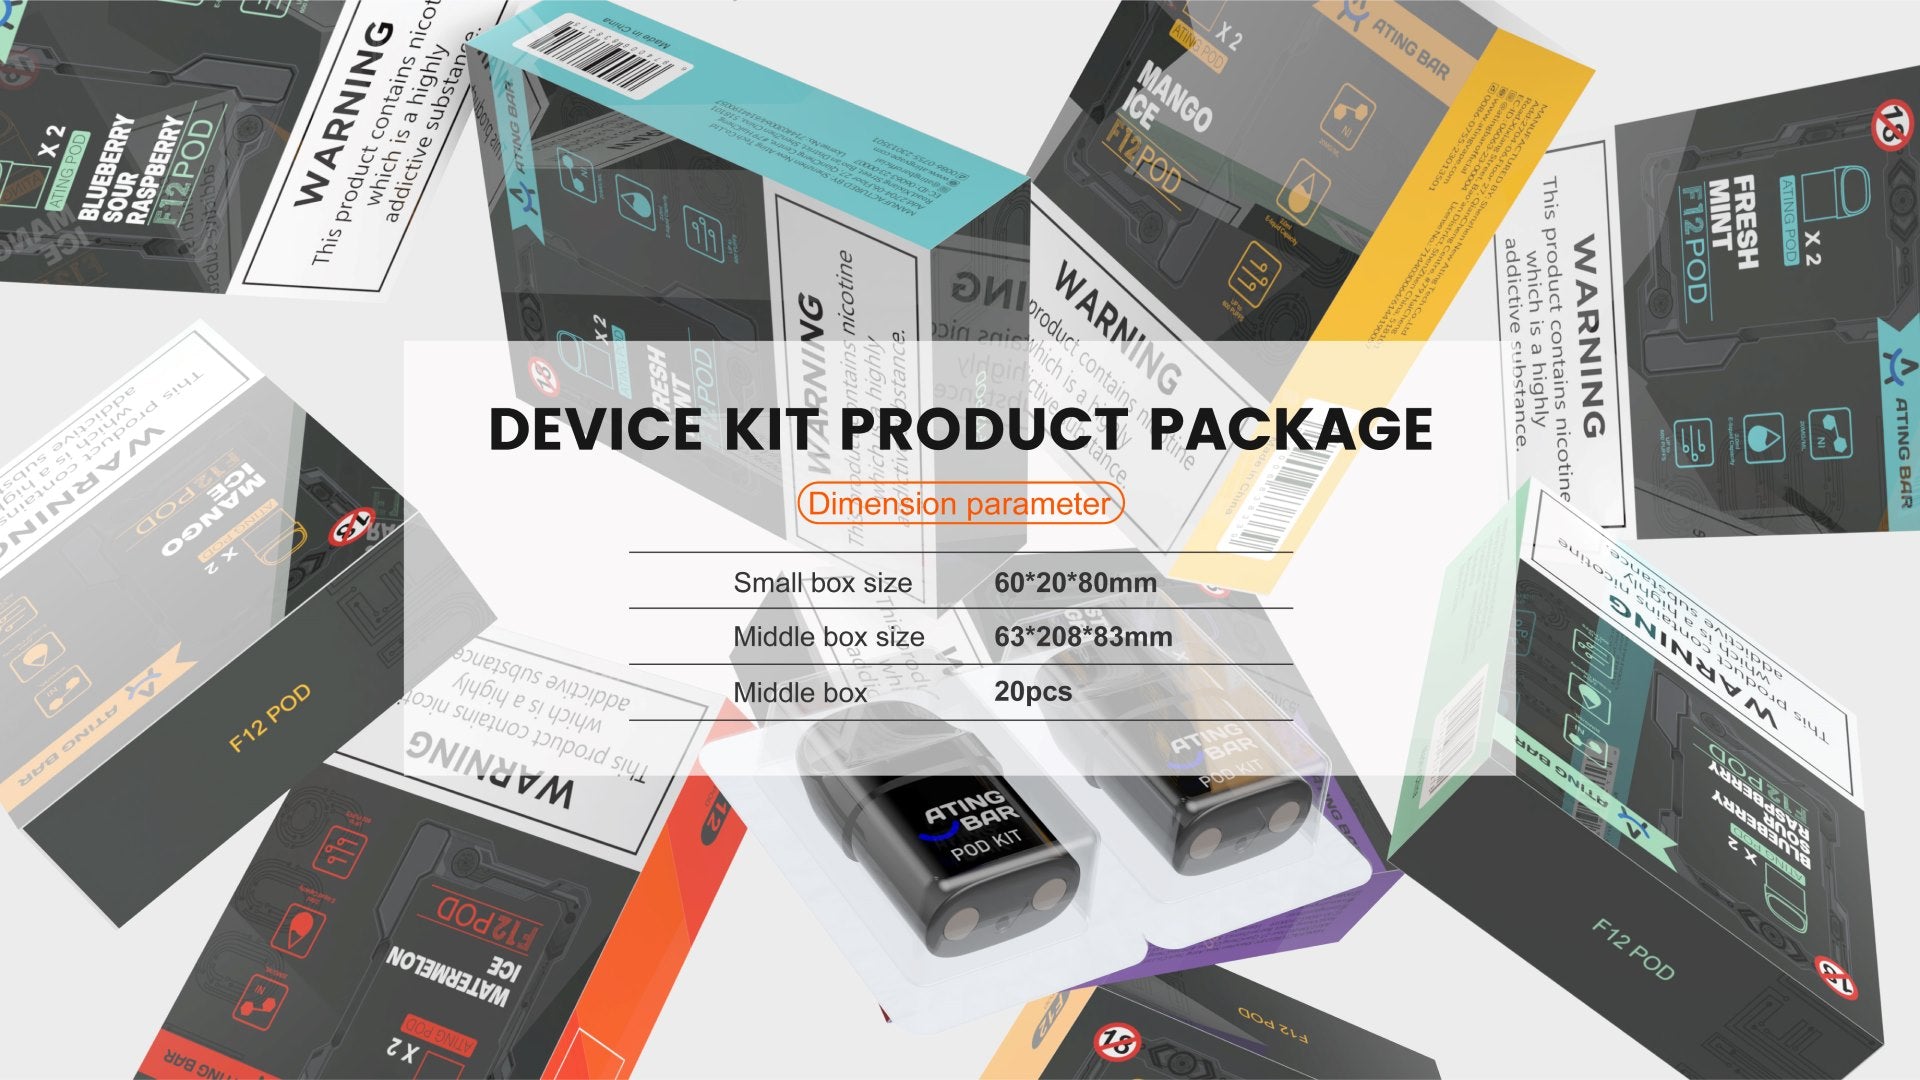 F02-Pod-Kit-Device-Kit-Product-Package